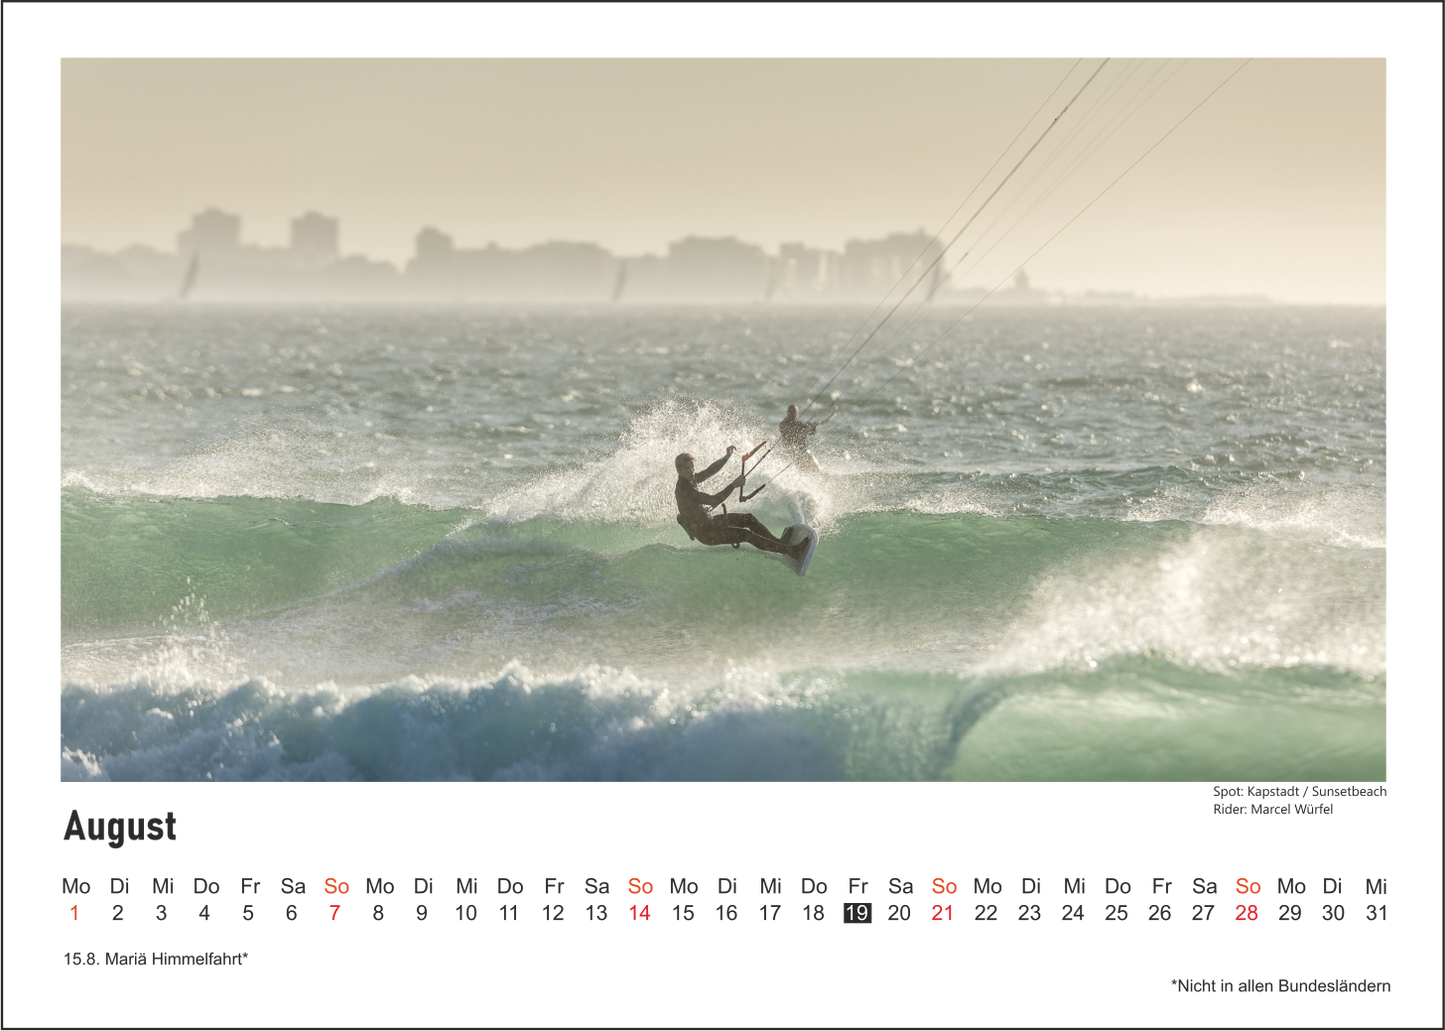 Kitesurfkalender 2022 by meerlicht-photography and stokedmagazin